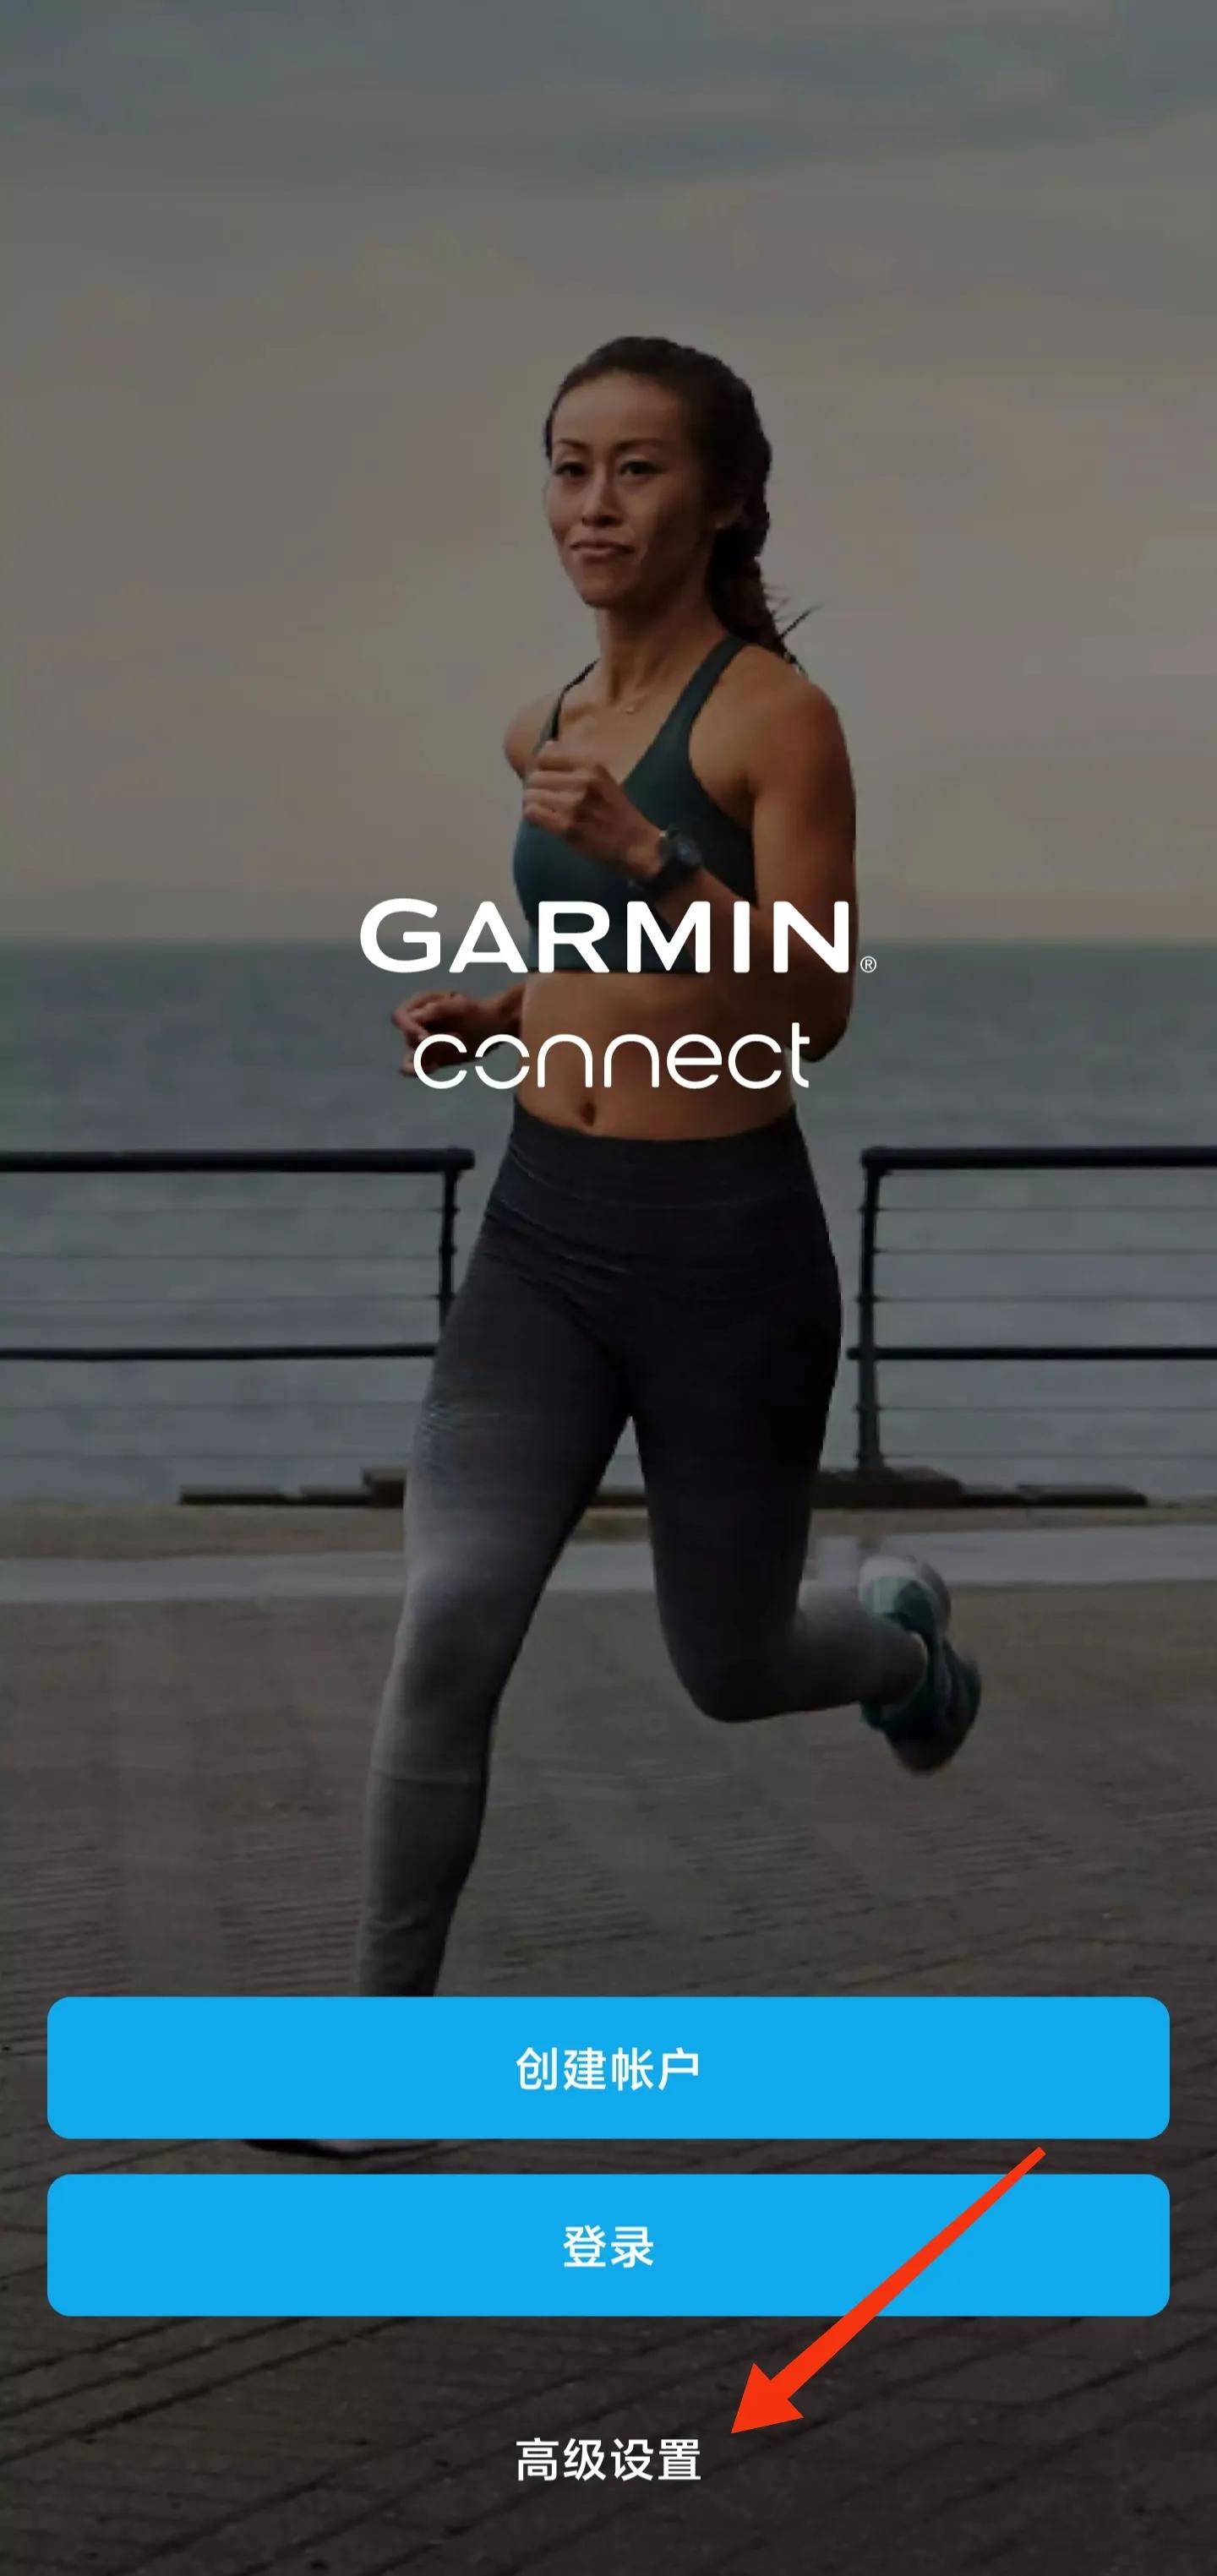 Garmin Connect 注册、登录国际版账号